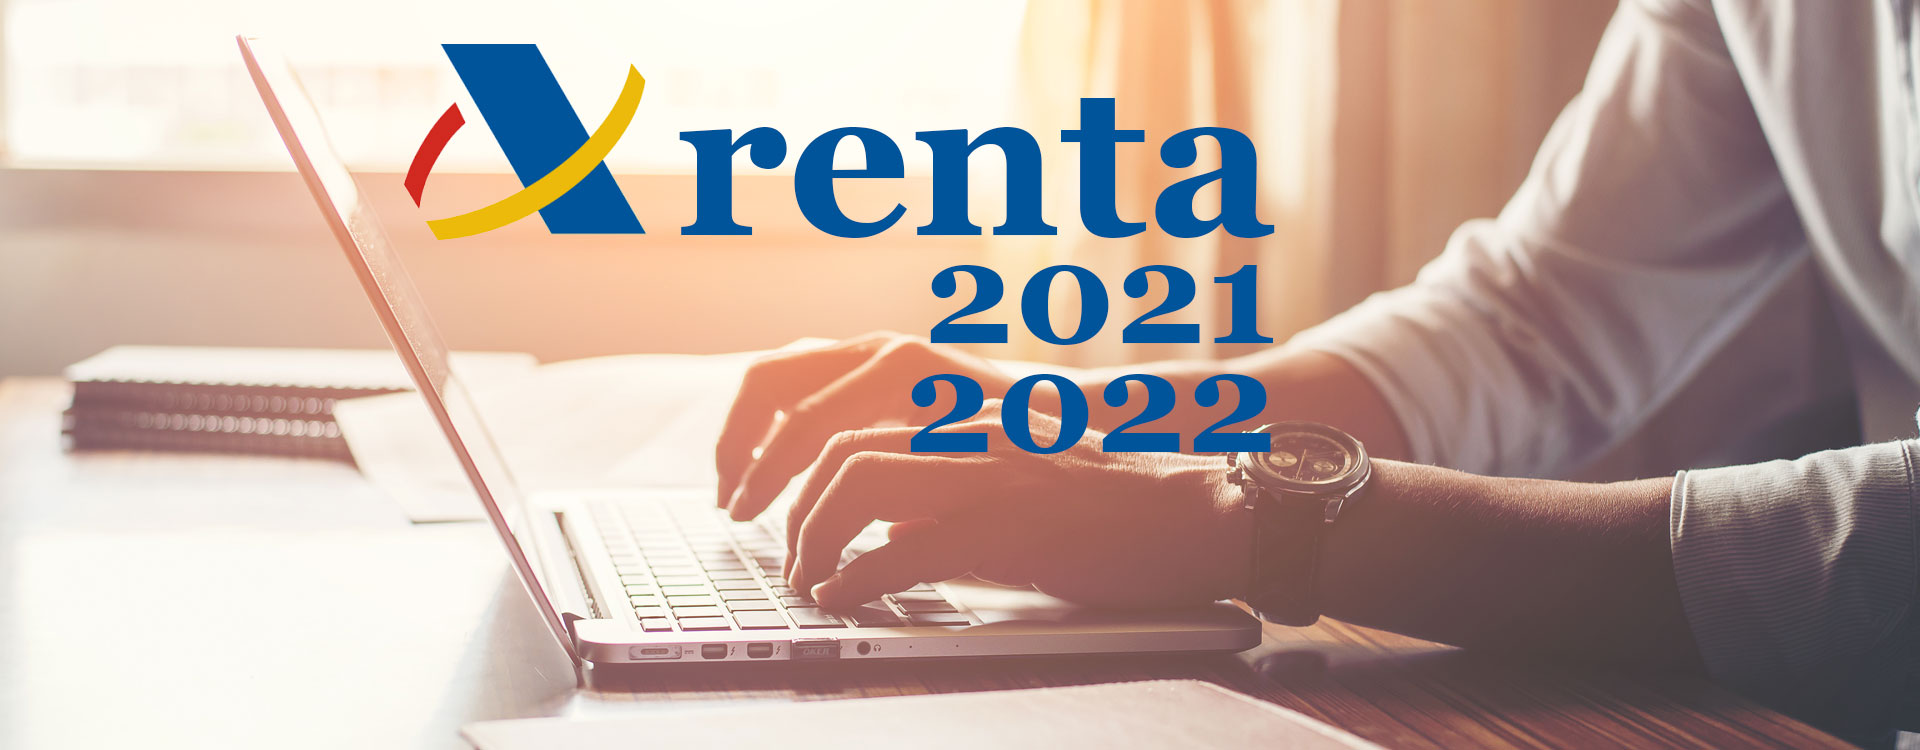 funcionarios-renta-2022-2021-ERTE-barcelona